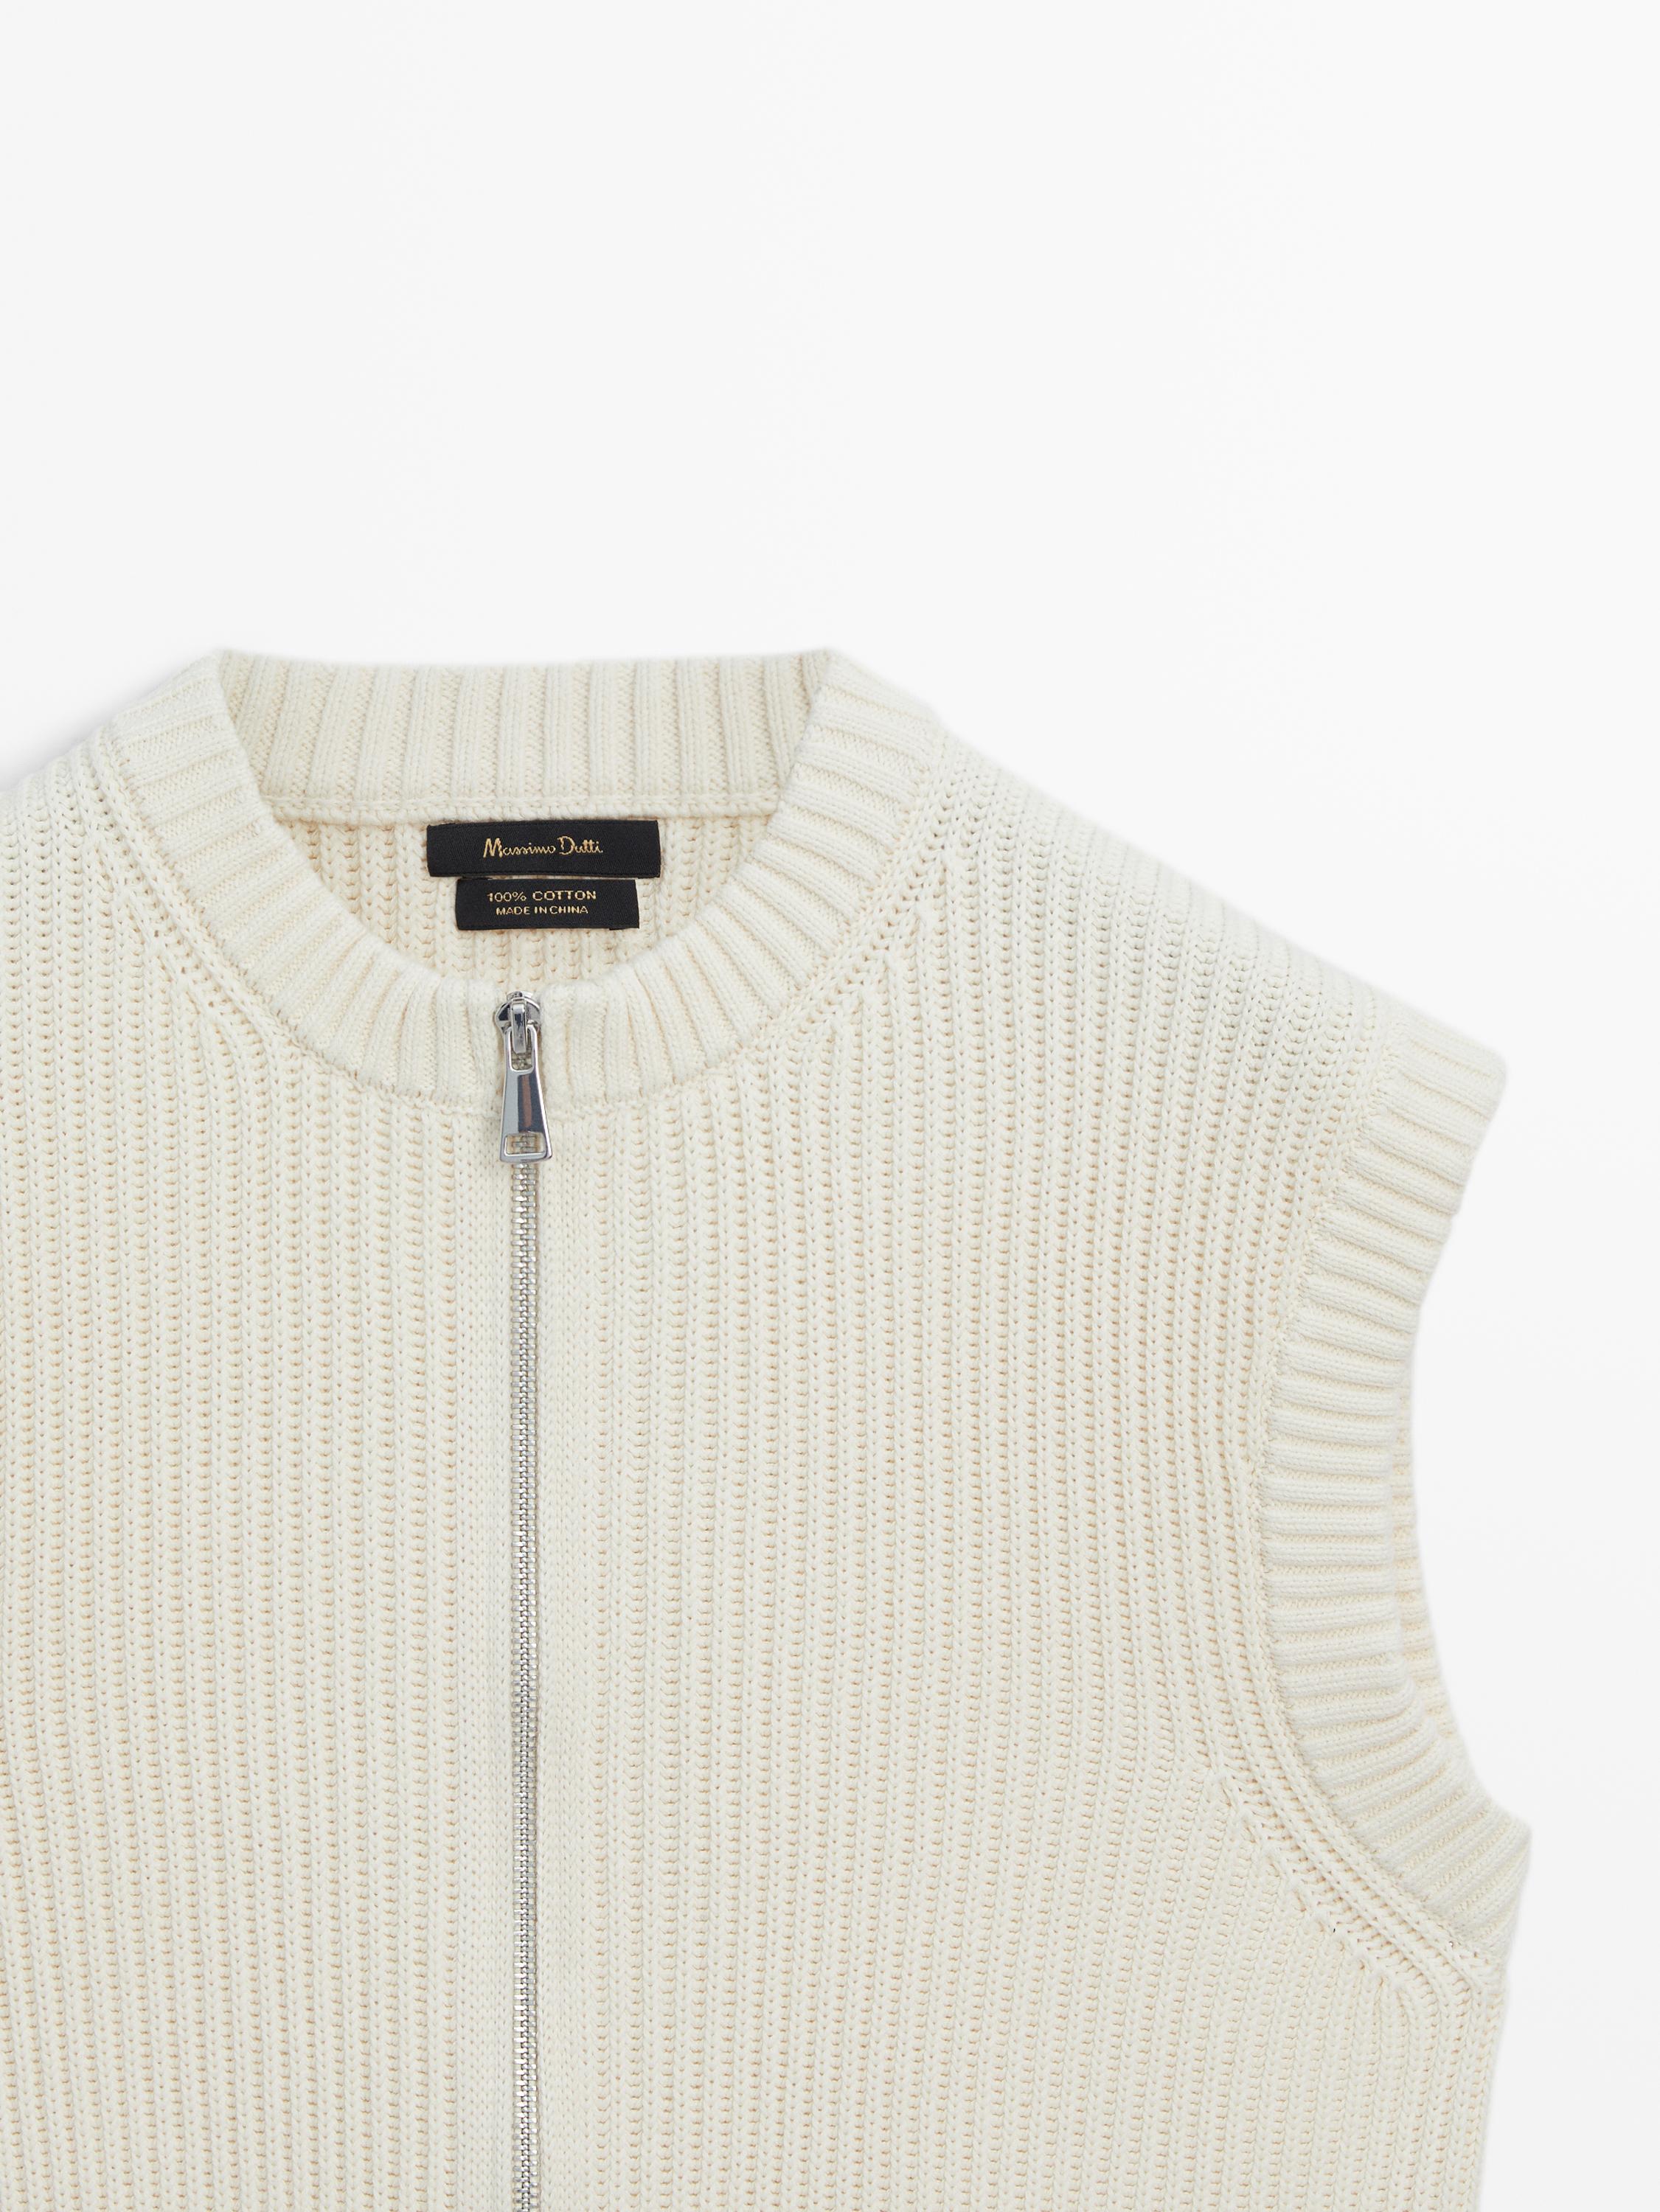 Cotton knit waistcoat with zip - Ecru | ZARA United States